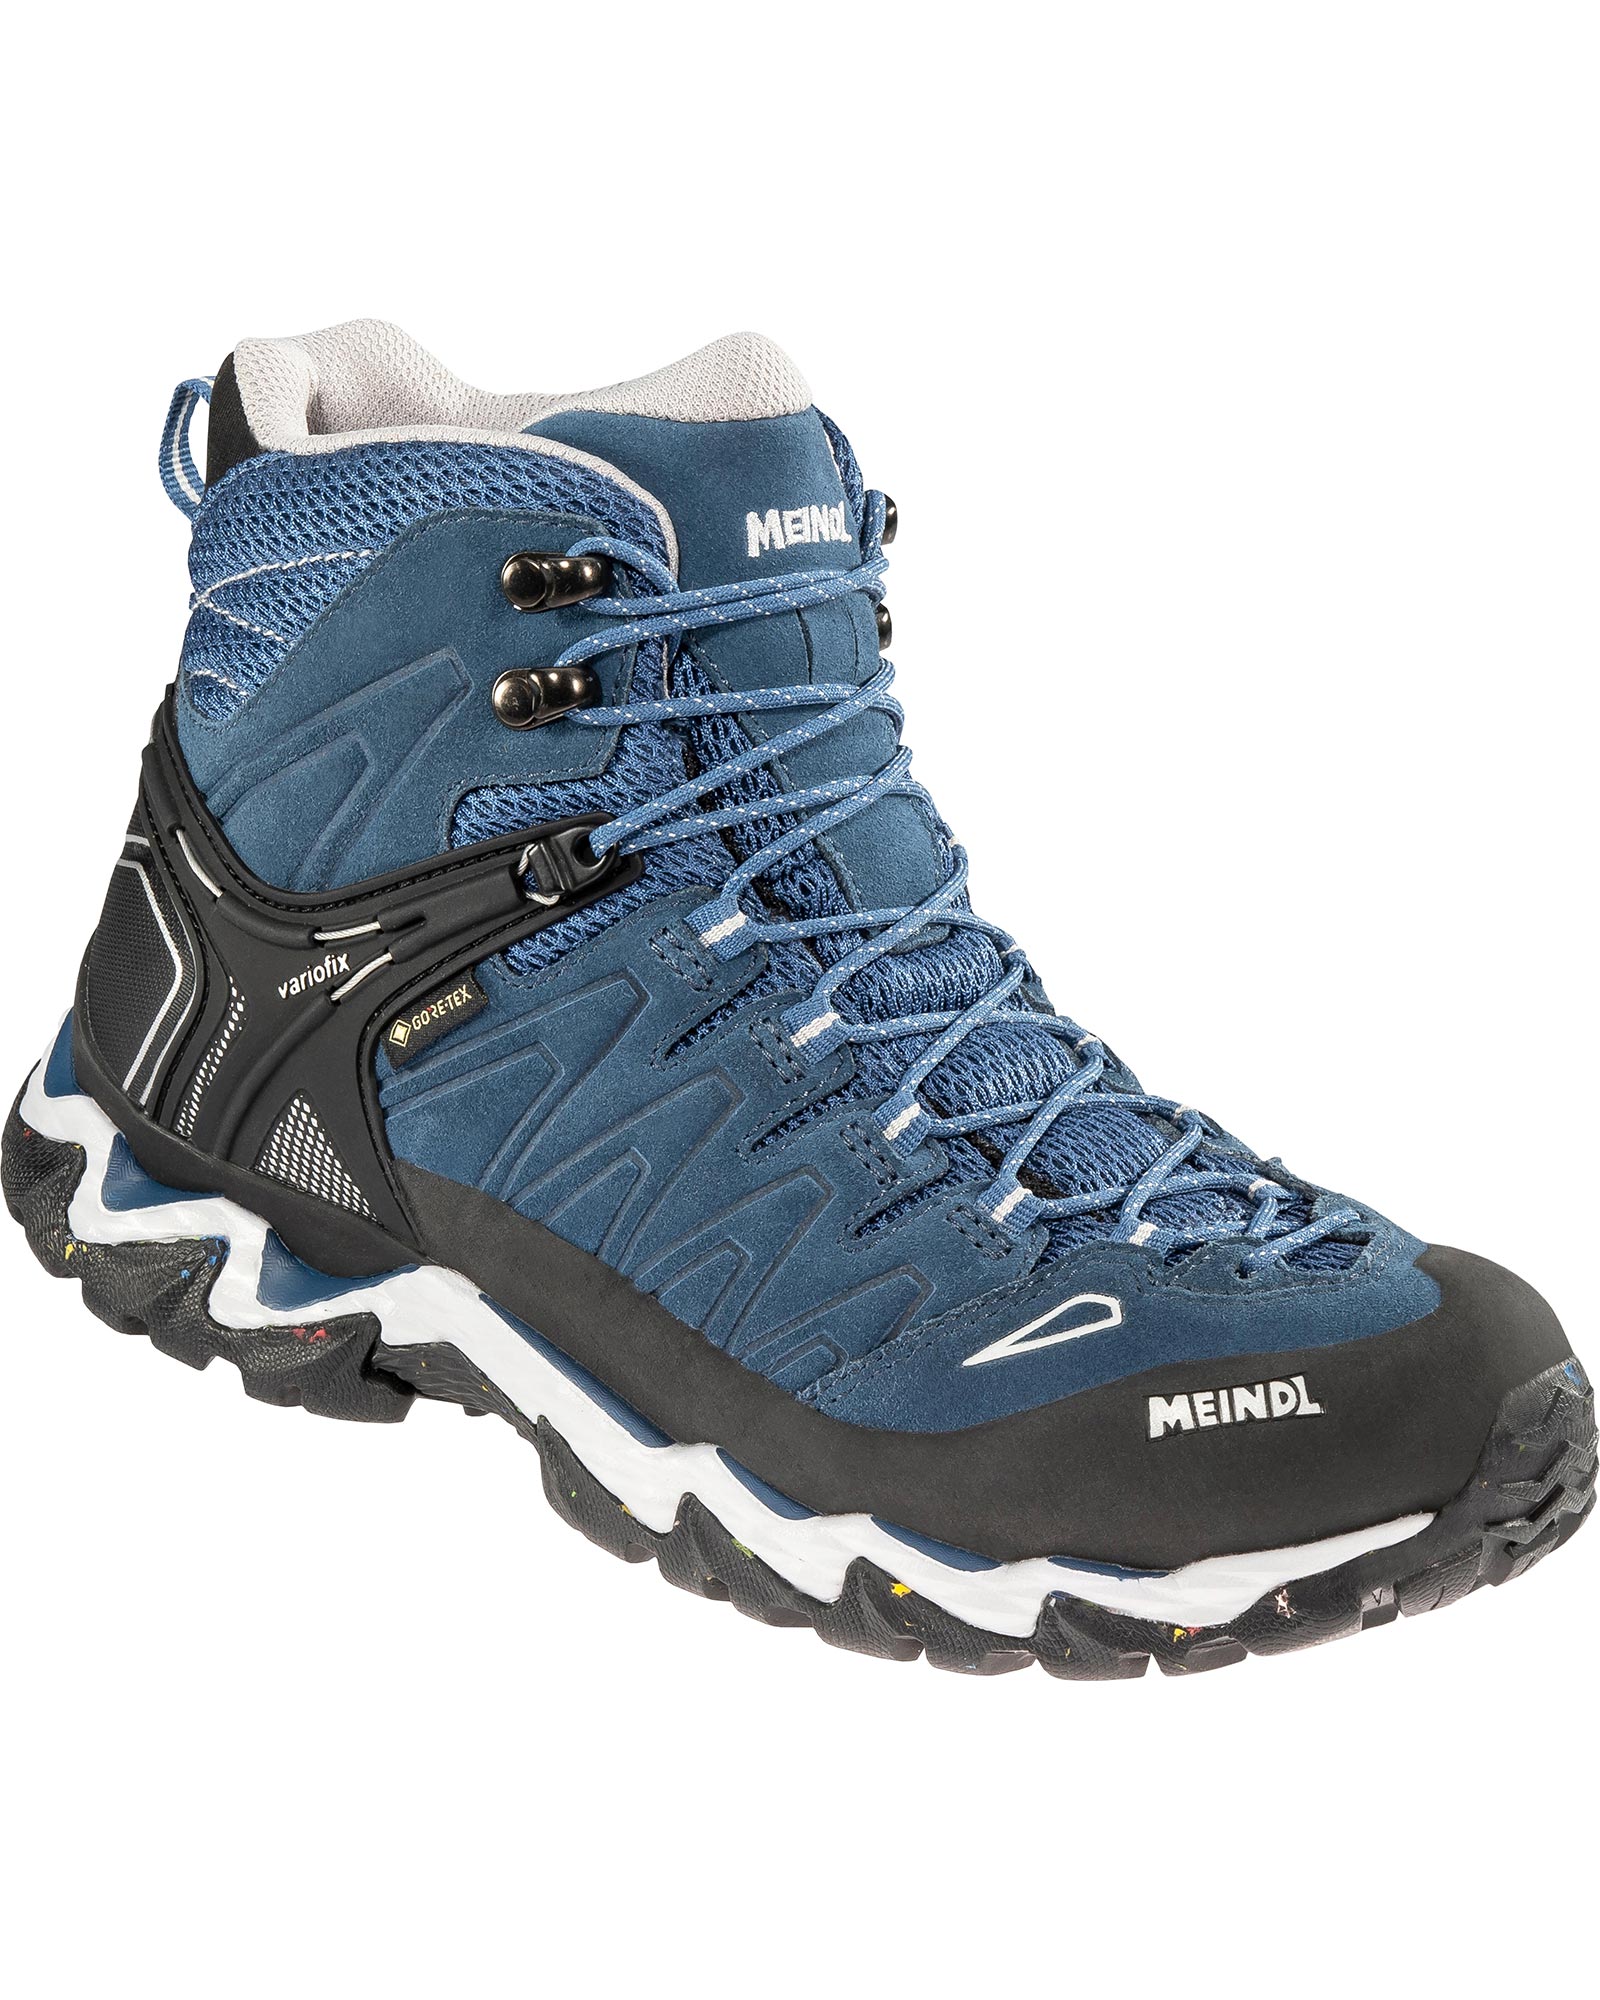 Meindl Lite Hike GORE TEX Women’s Boots - Blue/Light Blue UK 6.5